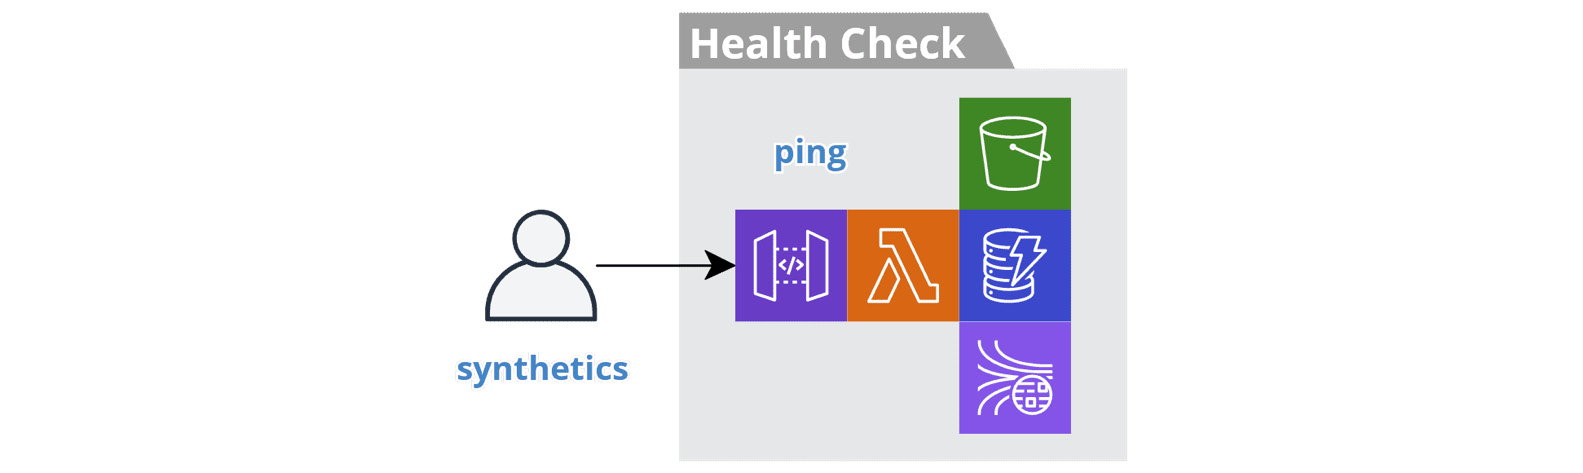 Figure 6.9 – Regional health check service
